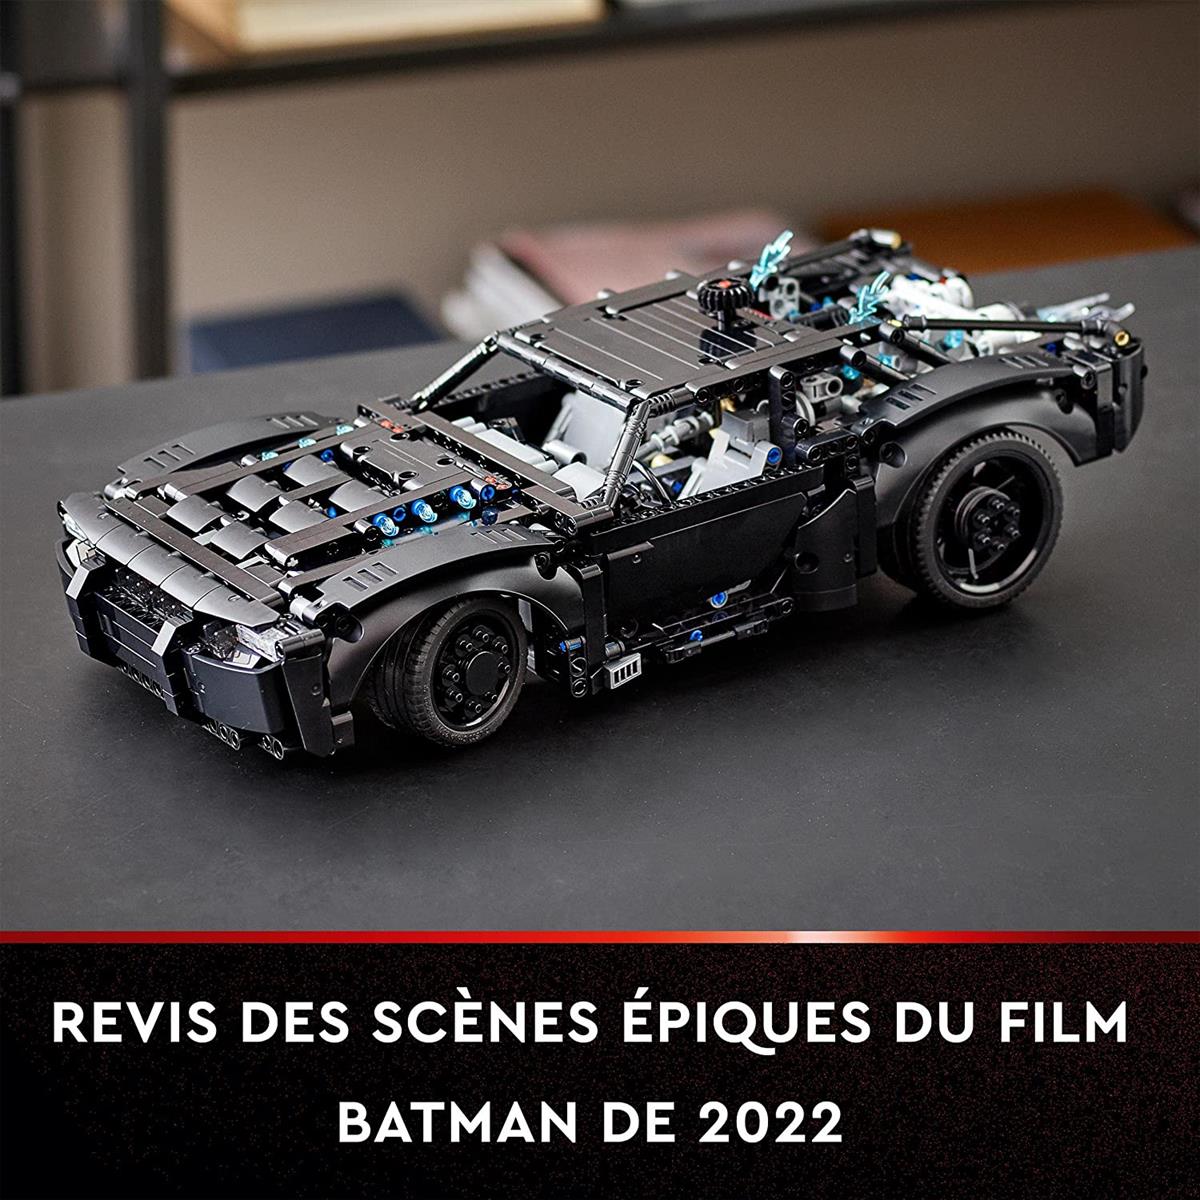 Lego Technic Batman Batmobile 42127 | Toysall